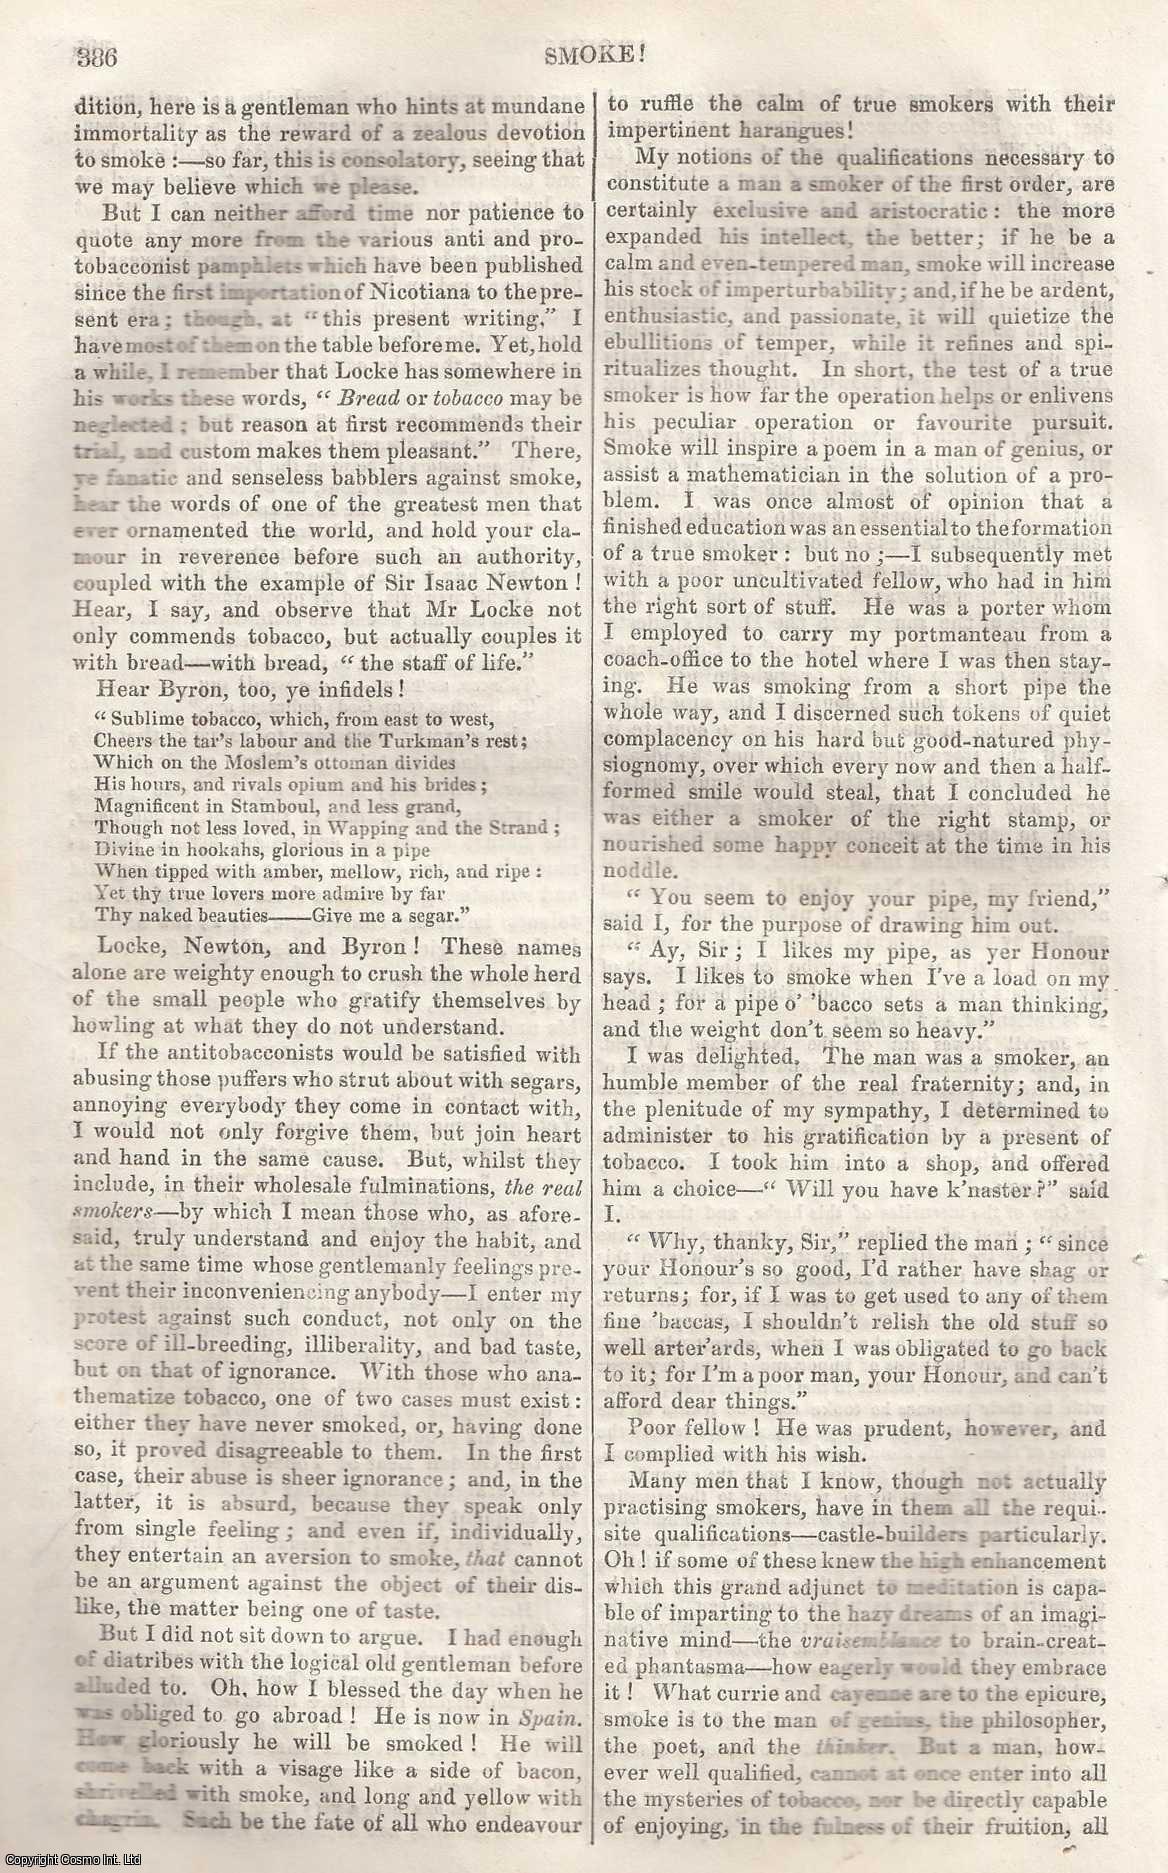 No Author Stated - Smoke! Smoking and Tobacco. An original article from Tait's Edinburgh Magazine, 1836.